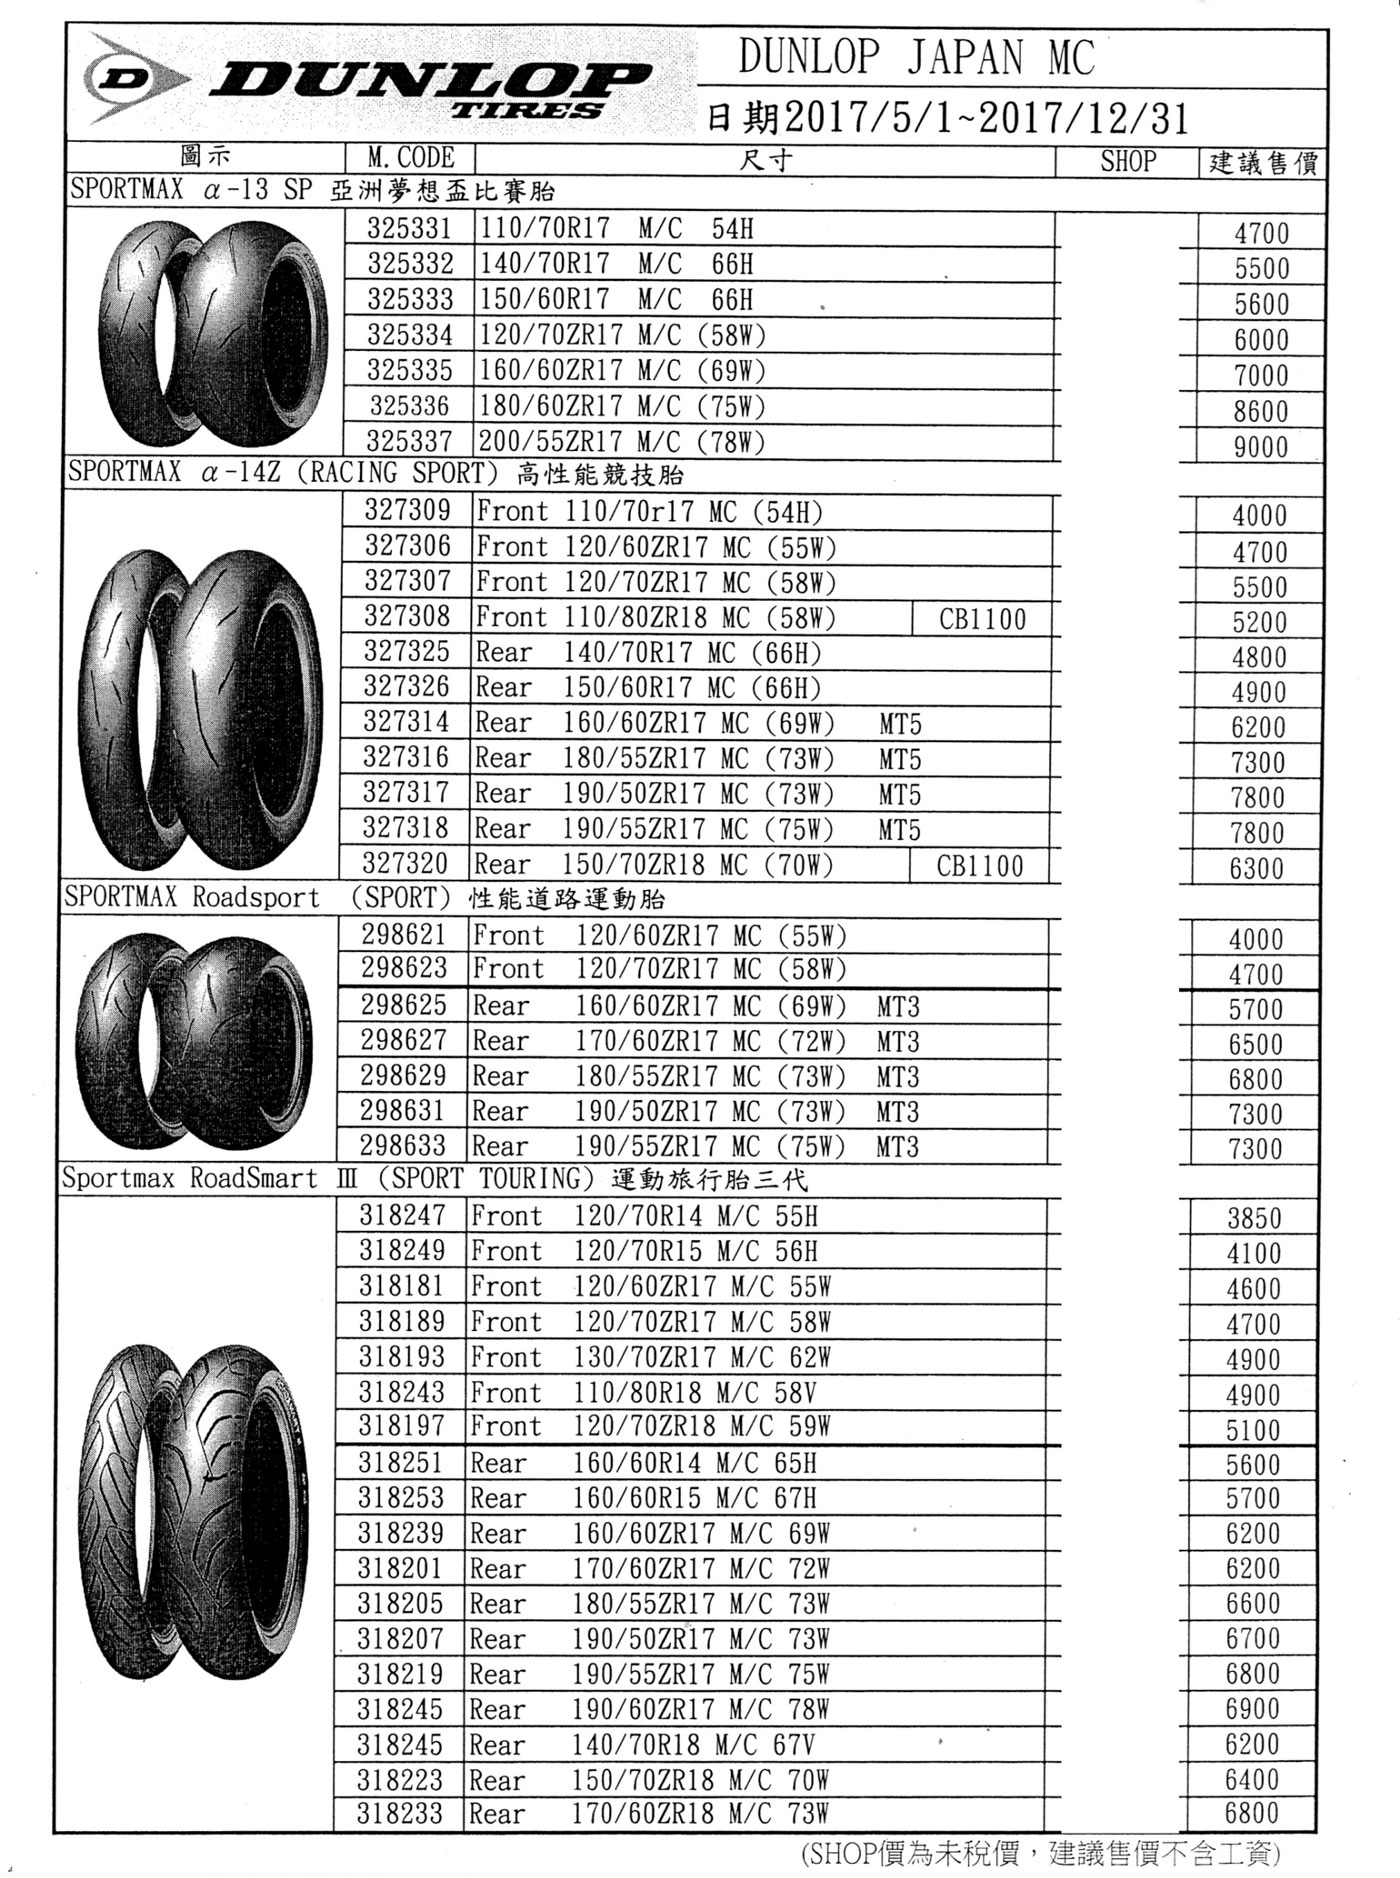 DUNLOP登祿普輪胎價格與規格